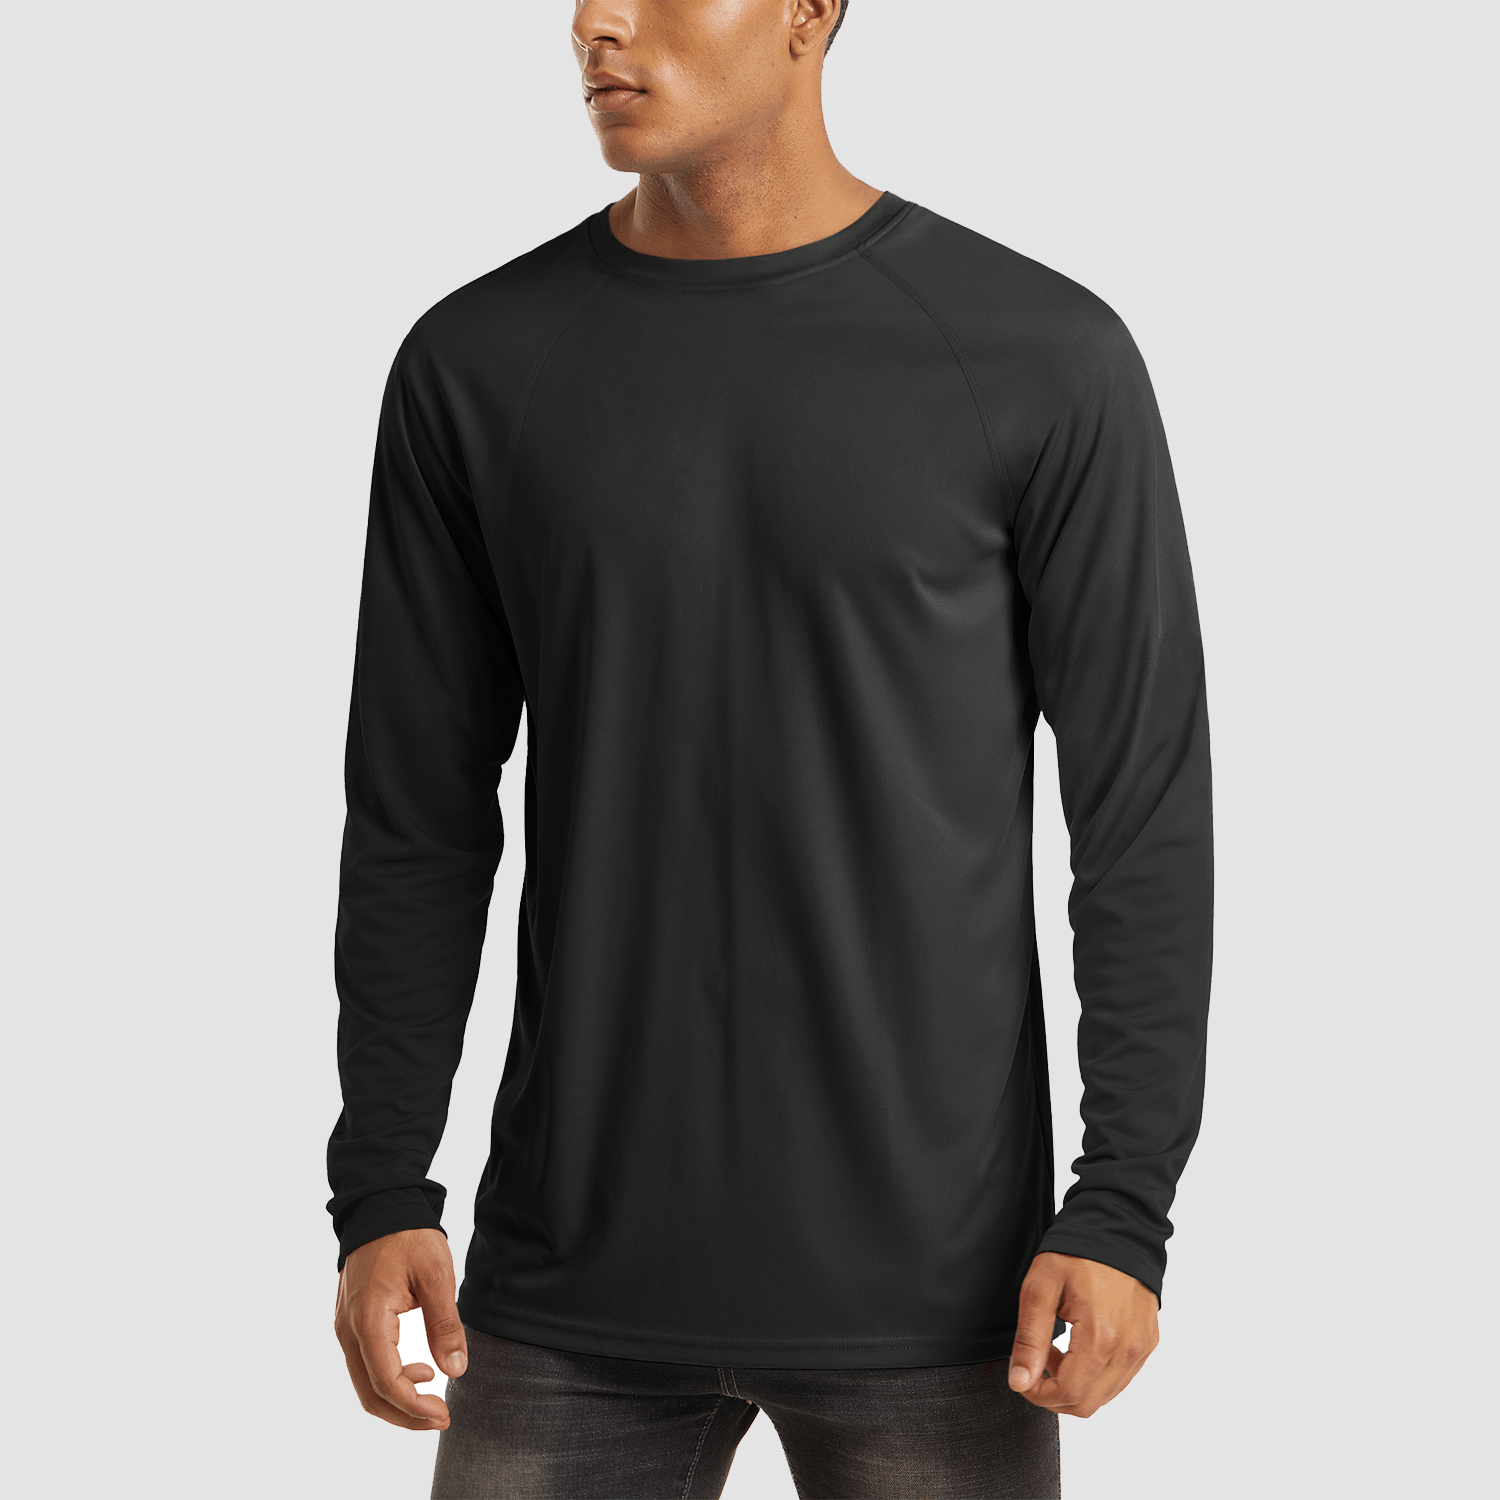 Men's UV Protection Long Sleeve T-Shirt Sun Block Casual Fishing Shirts  Tops